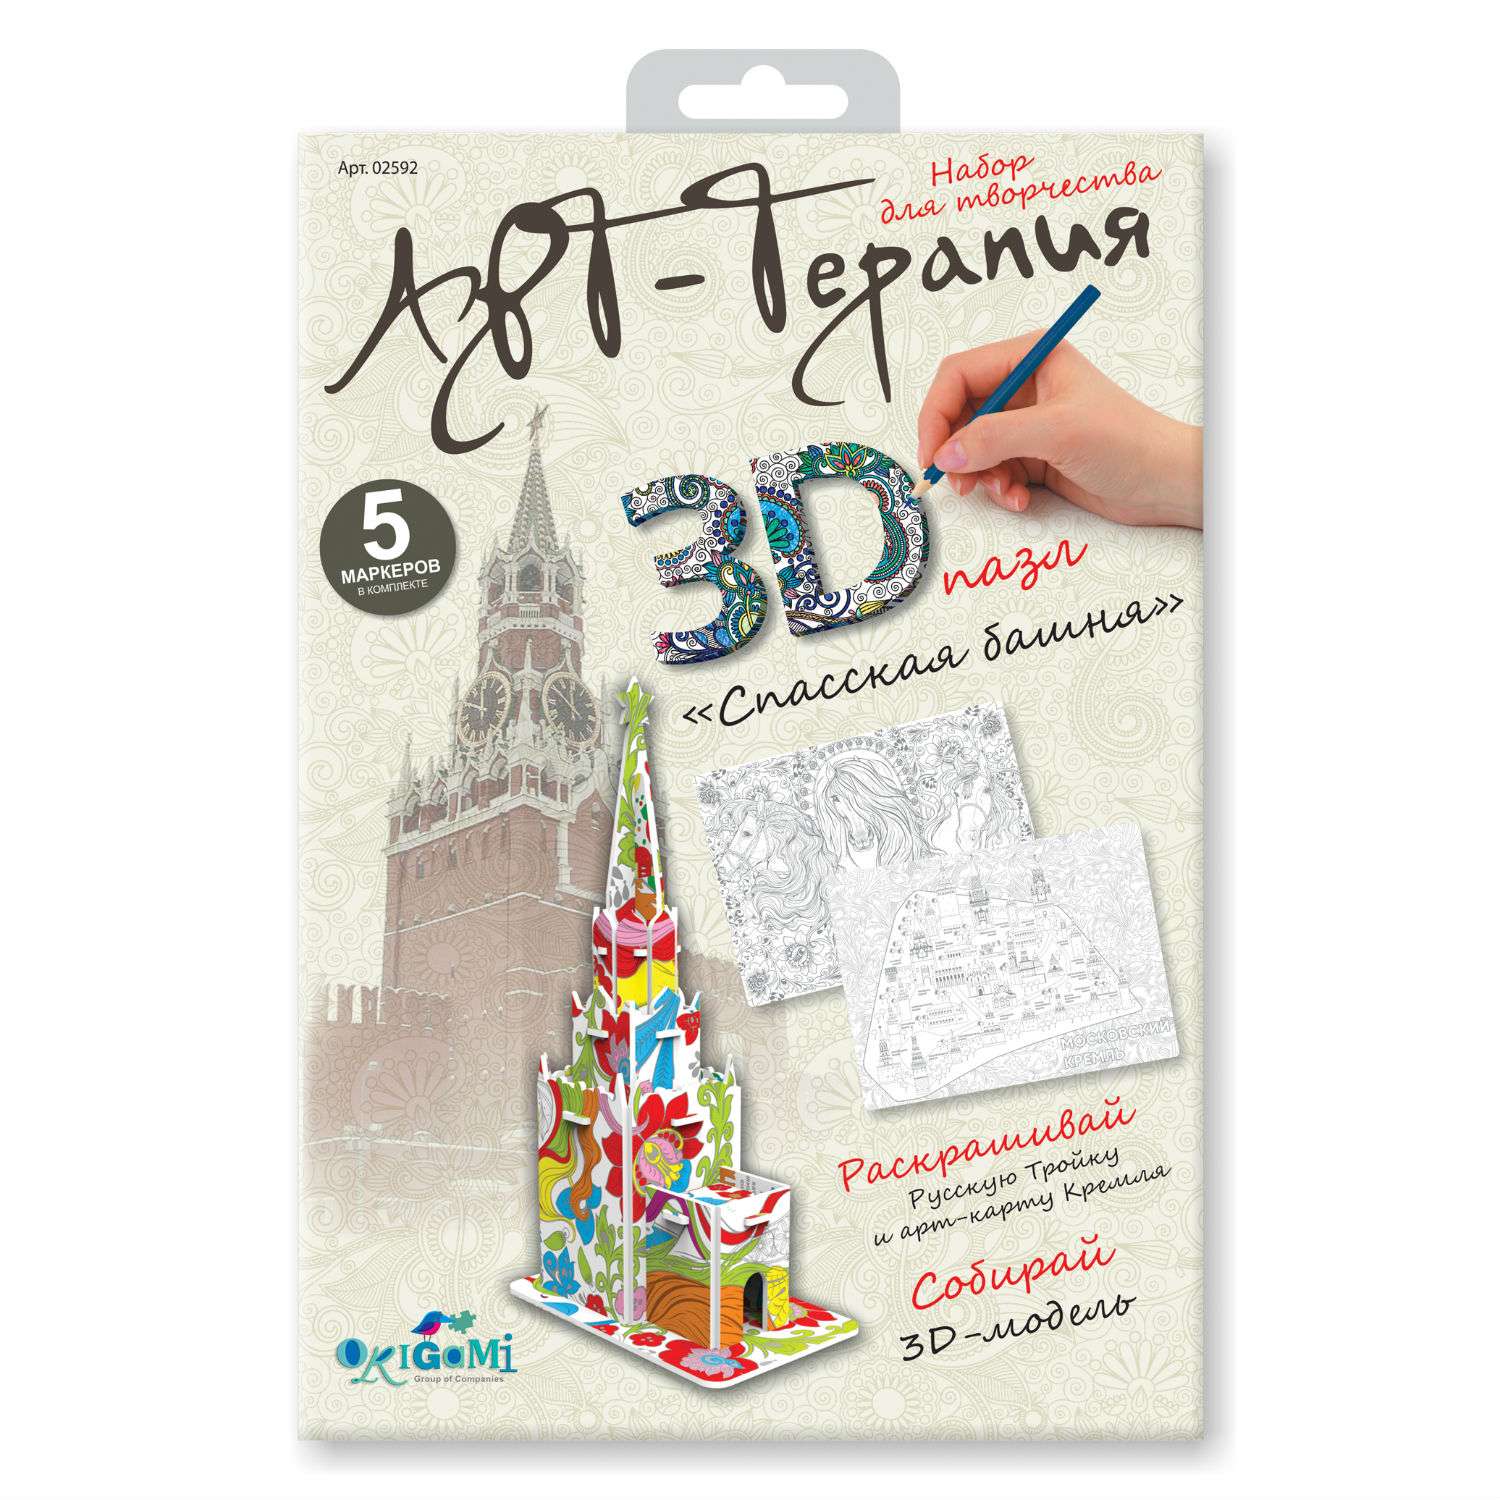 Пазл ORIGAMI 3D Арттерапия Спасская башня для раскрашивания - фото 1